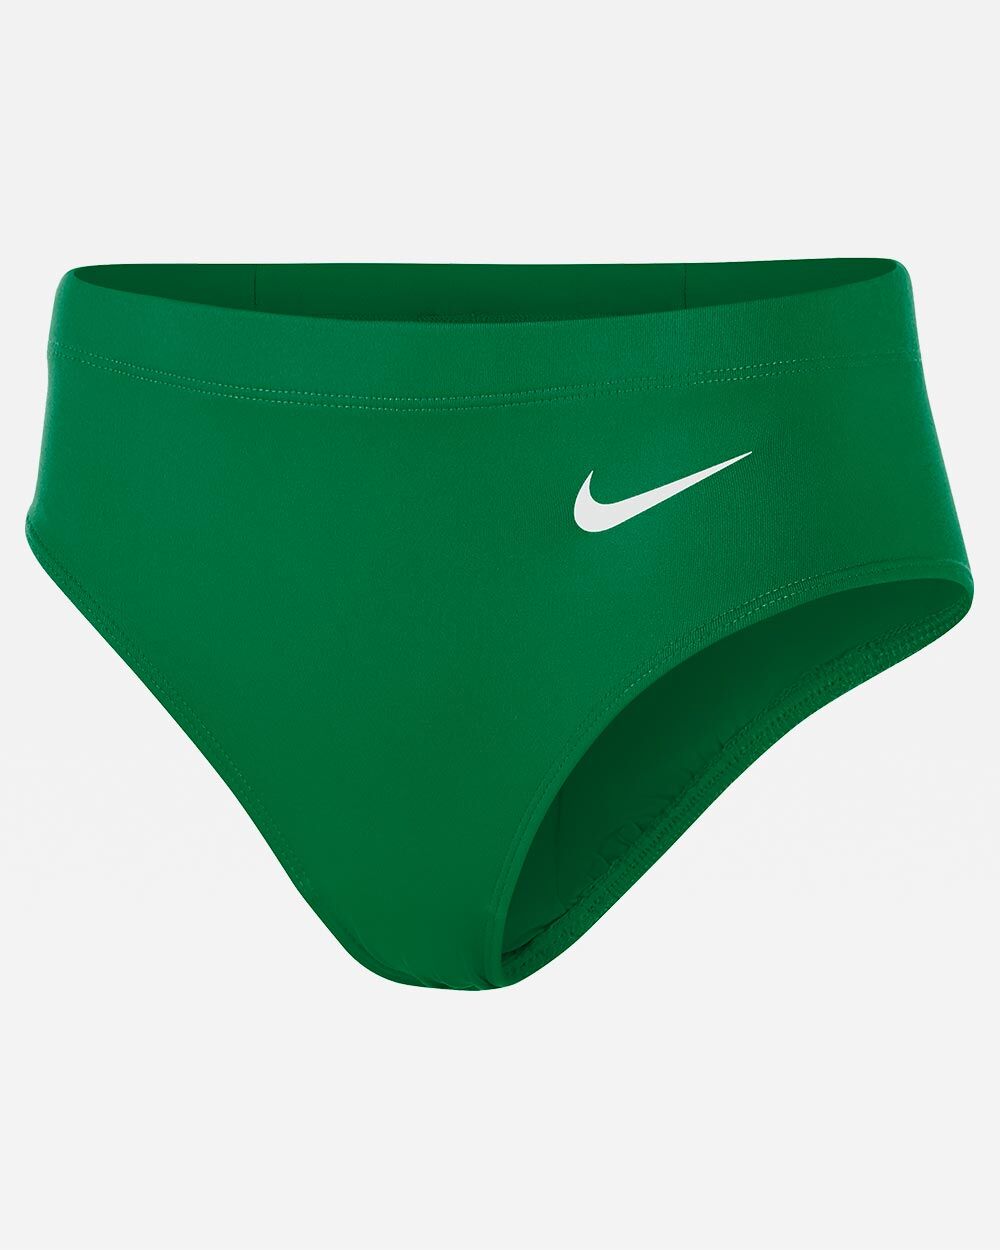 Bragas de running Nike Stock Verde para Mujeres - NT0309-302